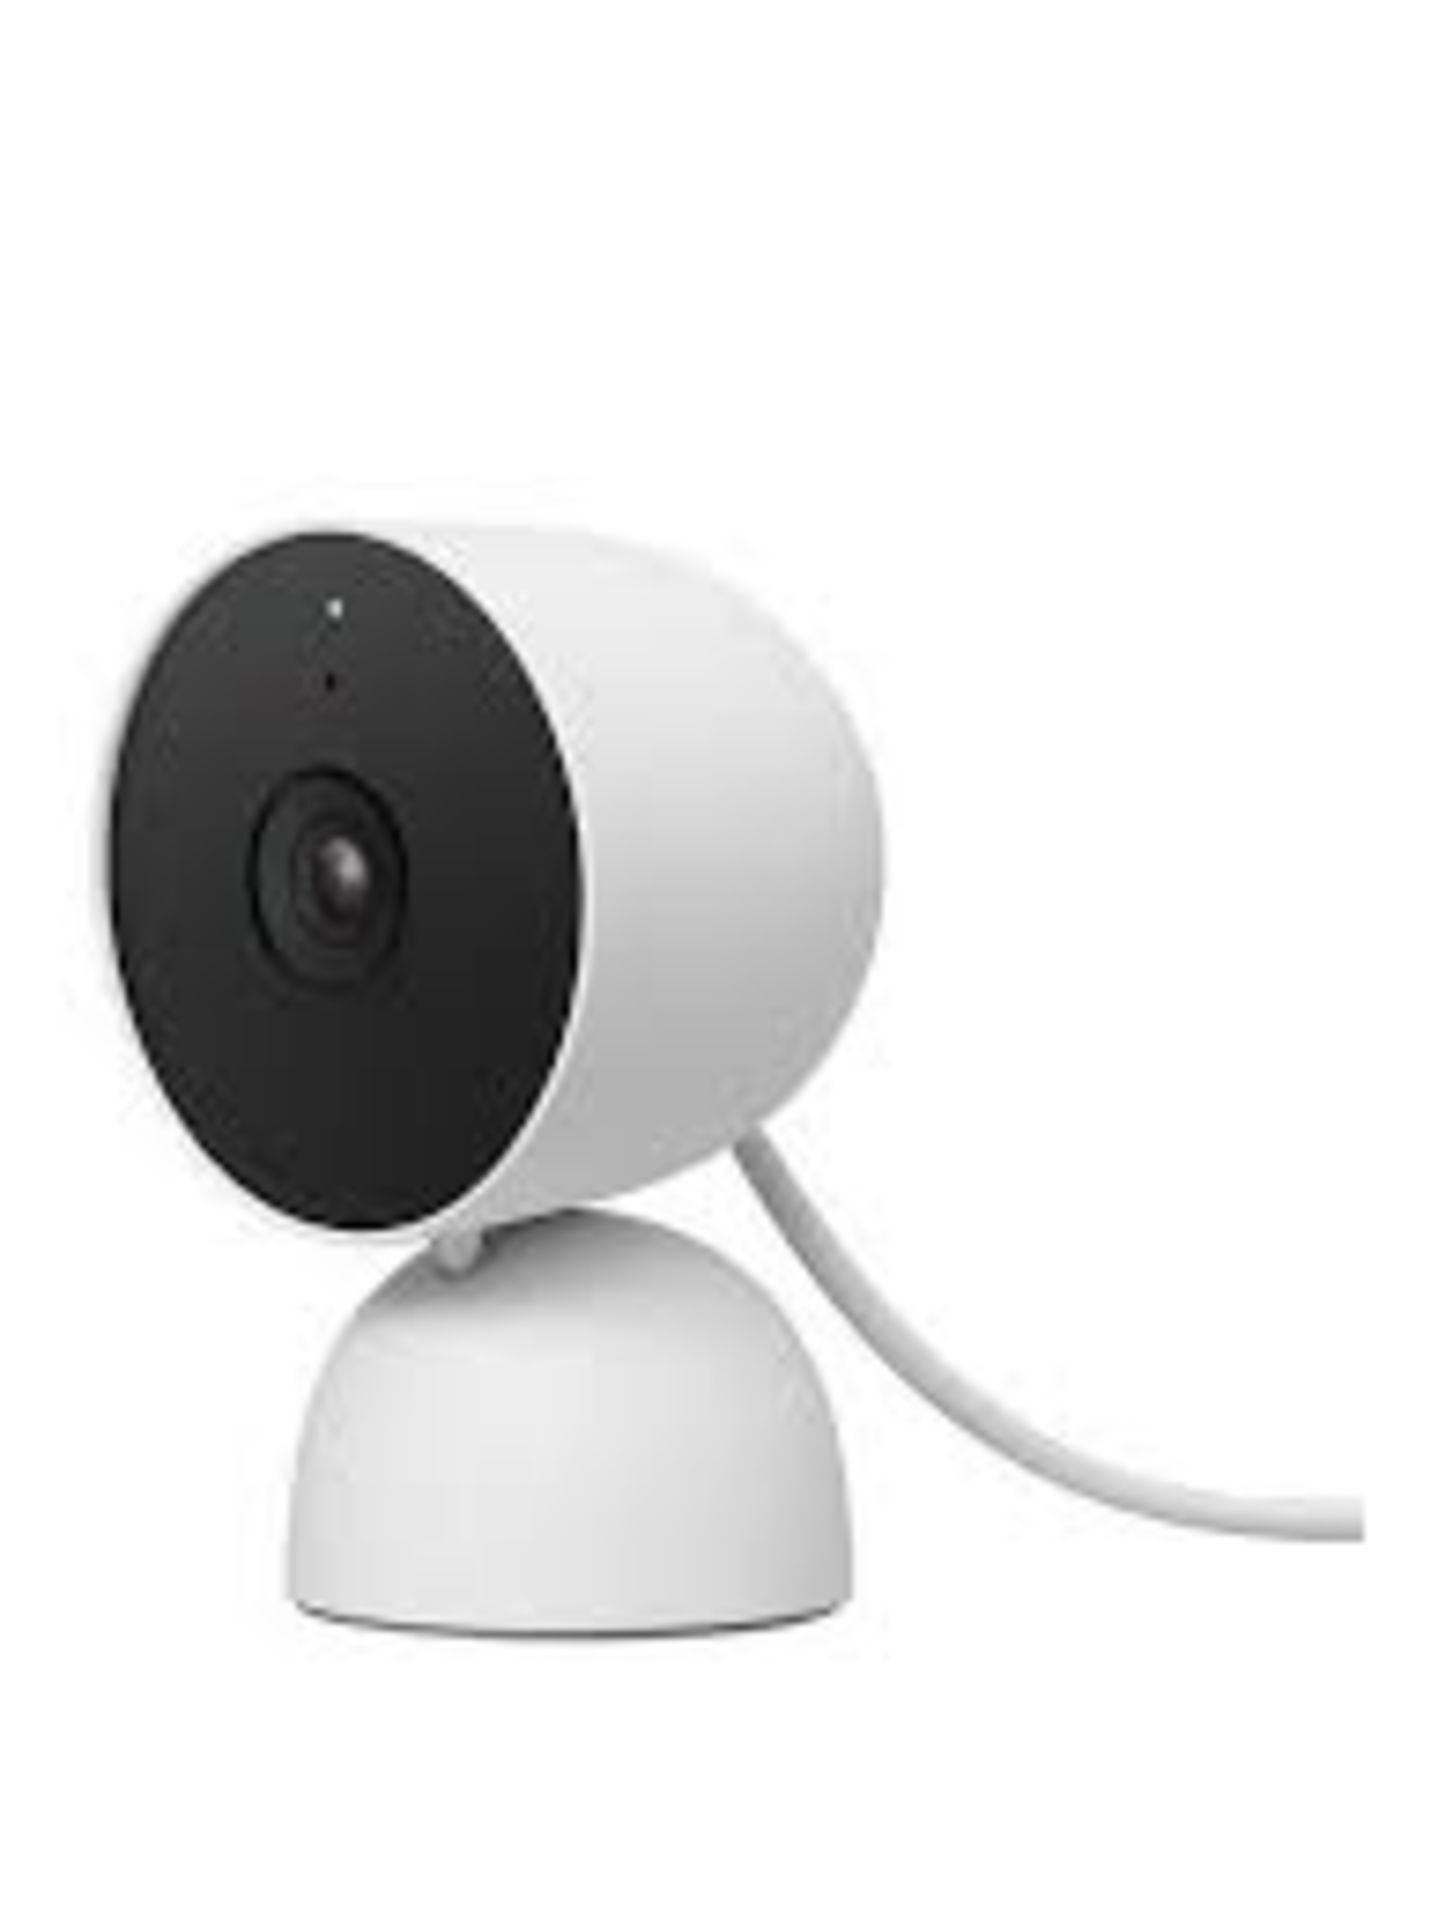 Google Nest Cam Indoor Security Camera - ER51.